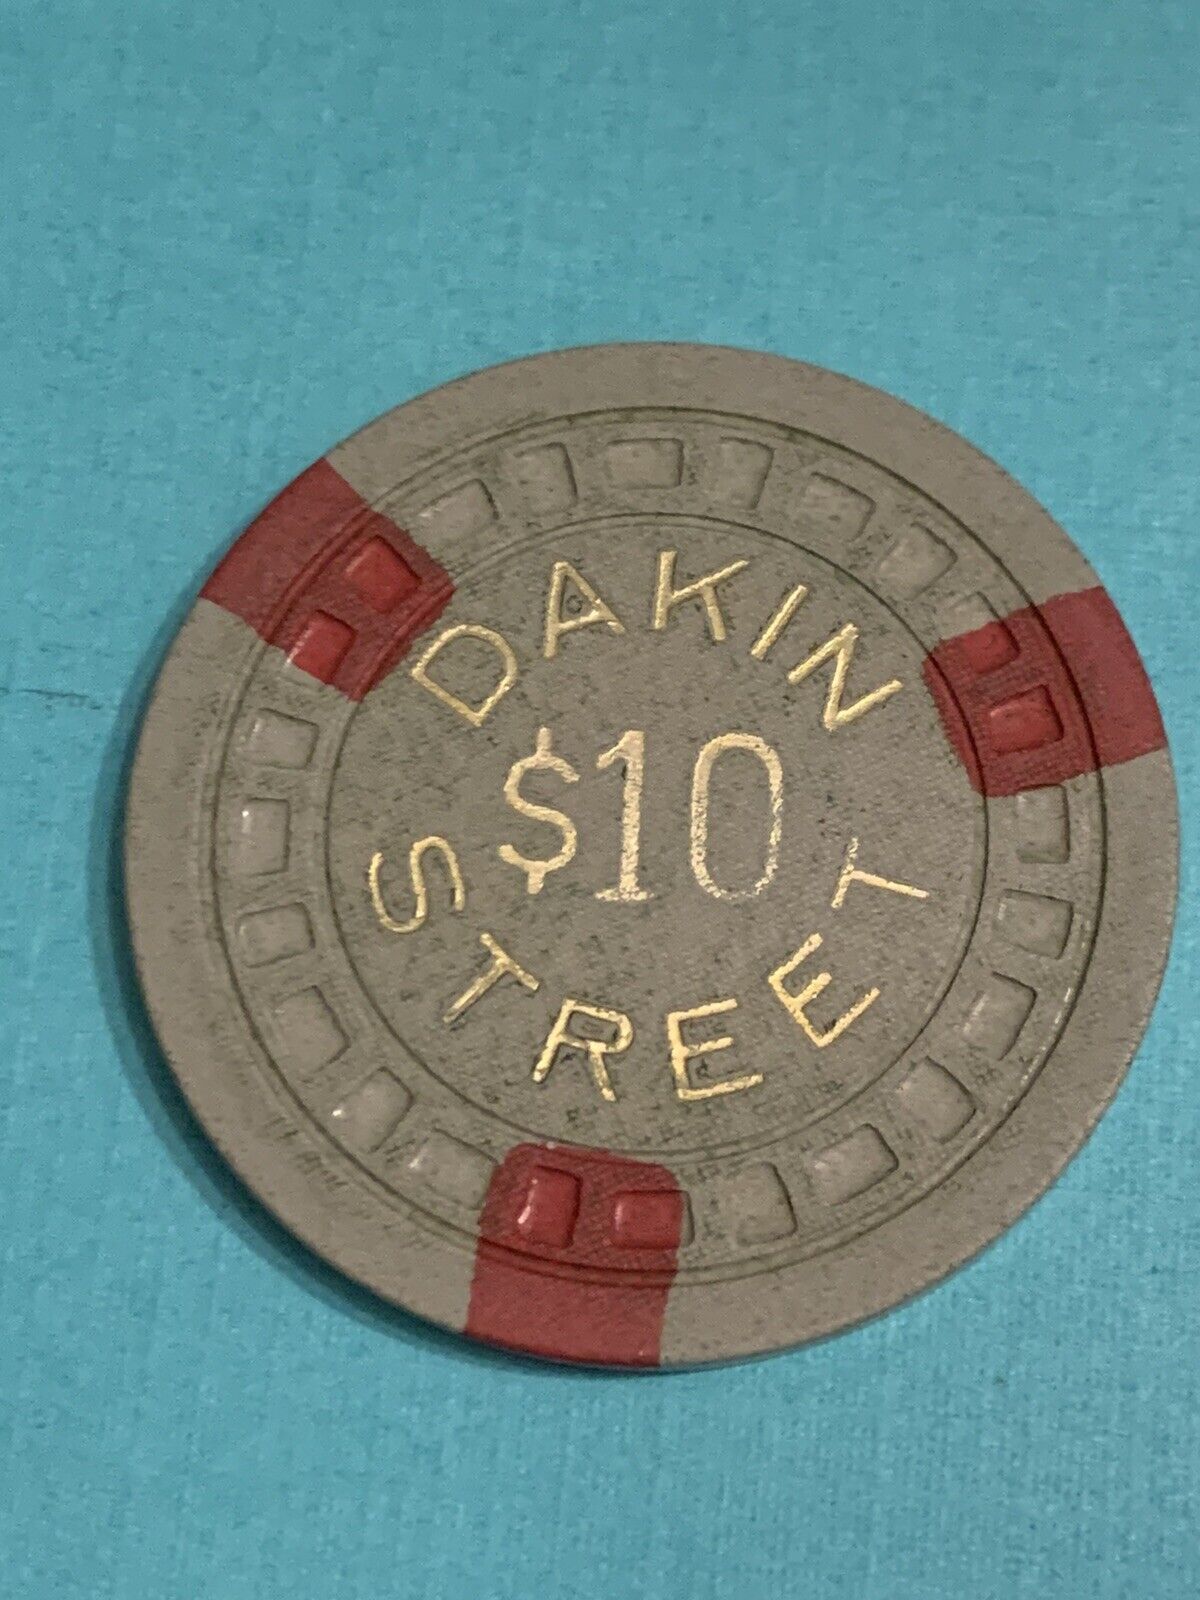 Notorious New Orleans Jefferson Hwy Illegal Dakin Street Casino $10 Poker Chip